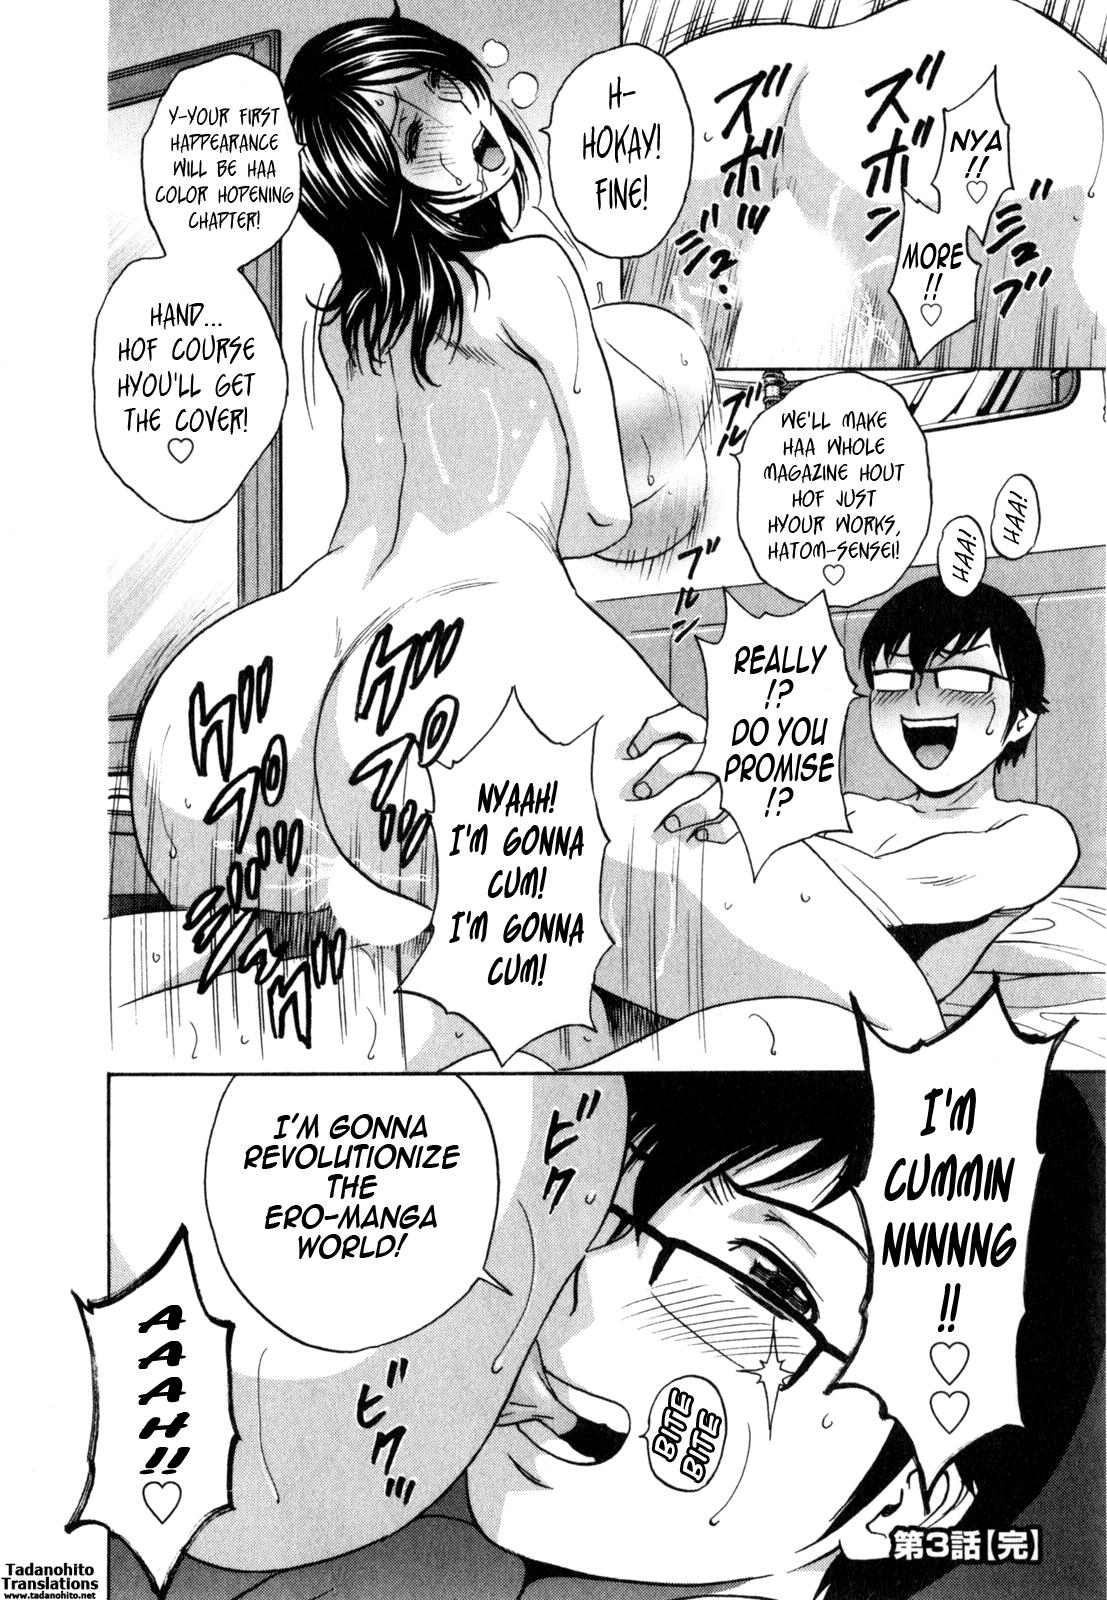 [Hidemaru] Life with Married Women Just Like a Manga 3 - Ch. 1-8 [English] {Tadanohito} 63